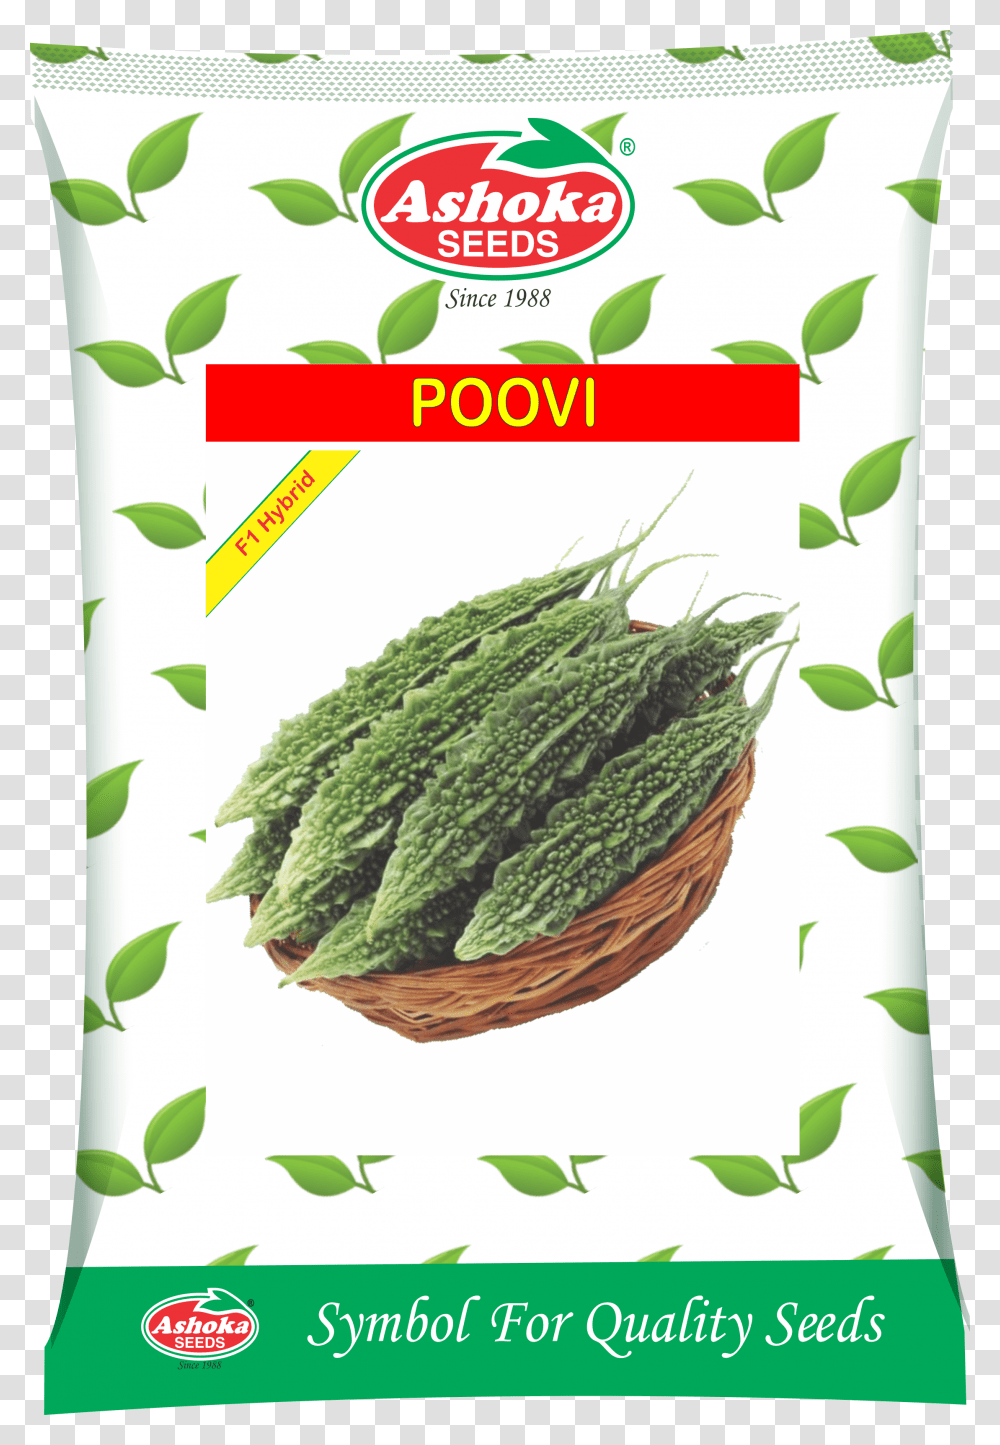 Ashok Seeds In Chilli Product Download Ashoka Bush Beans Seeds, Potted Plant, Vase, Jar, Pottery Transparent Png